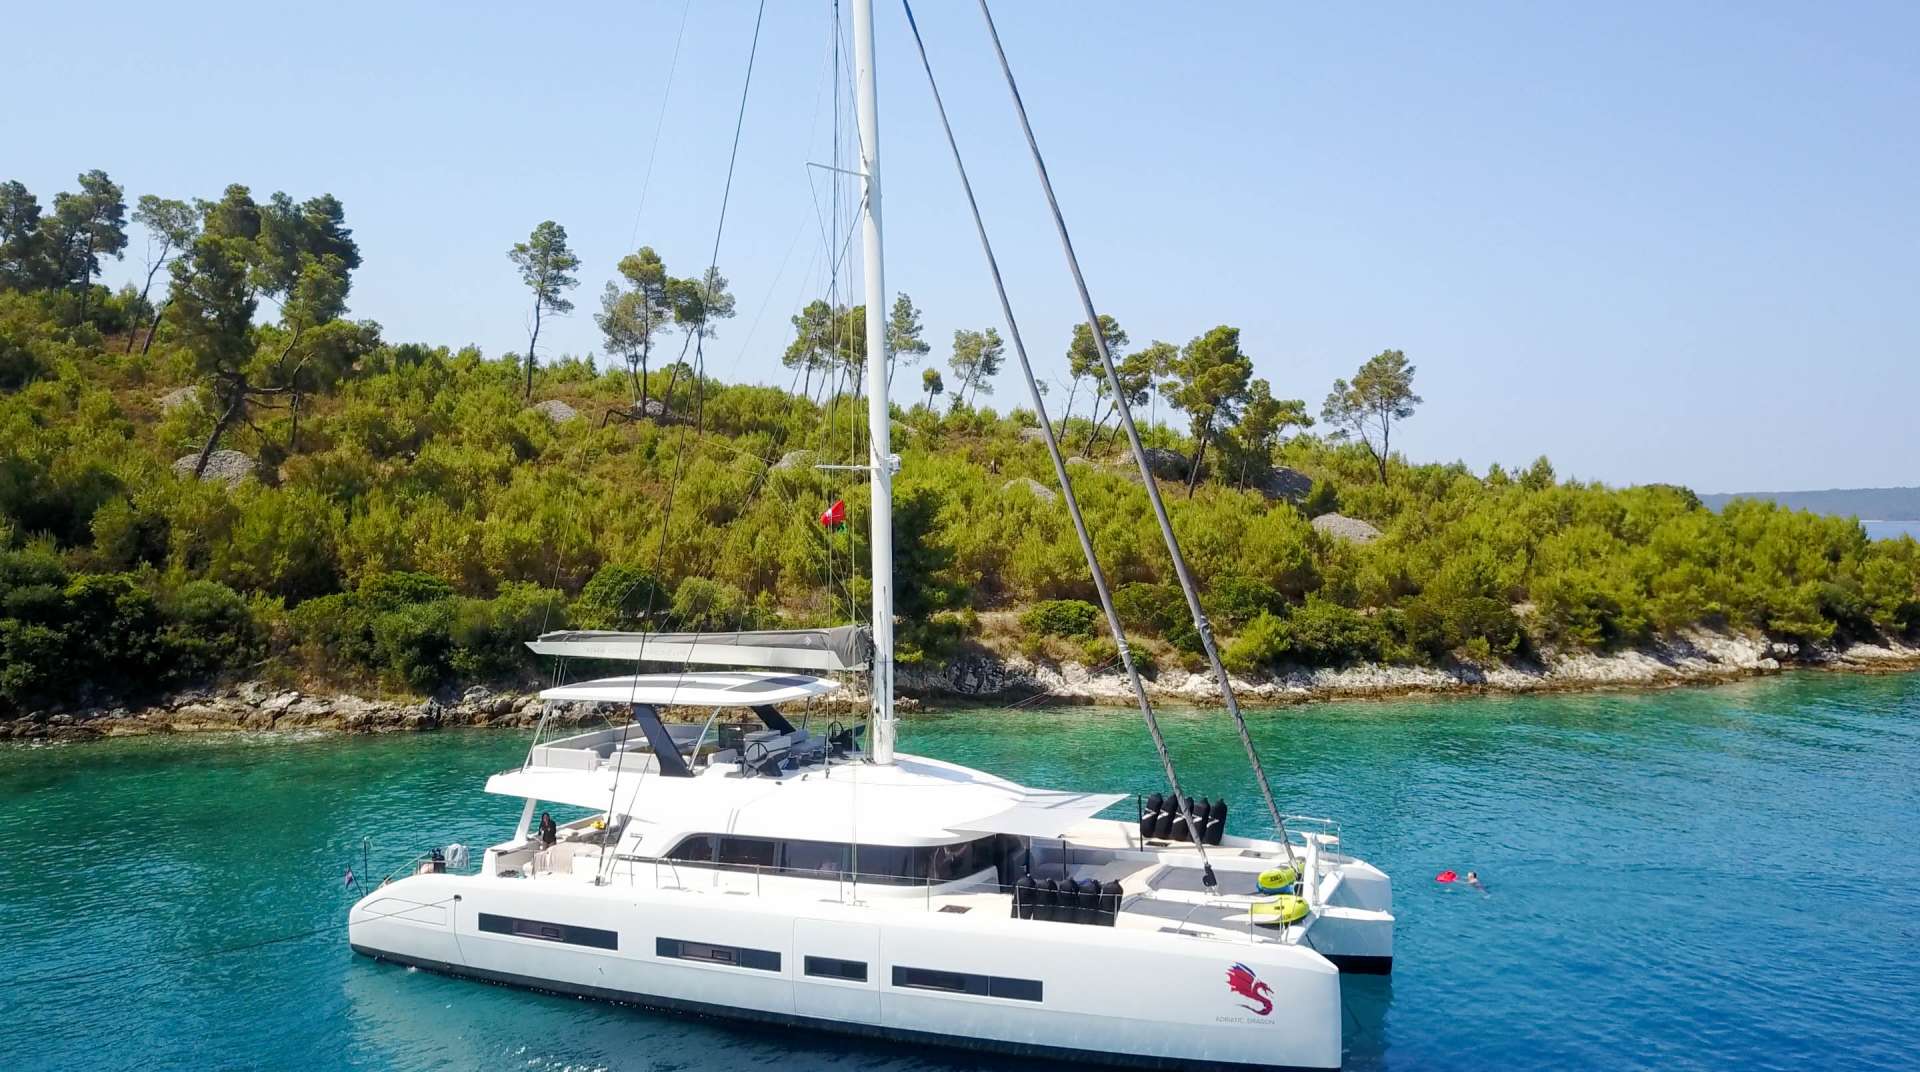 adriatic dragon (lagoon 77) - Yacht Charter Brbinj & Boat hire in Croatia 1